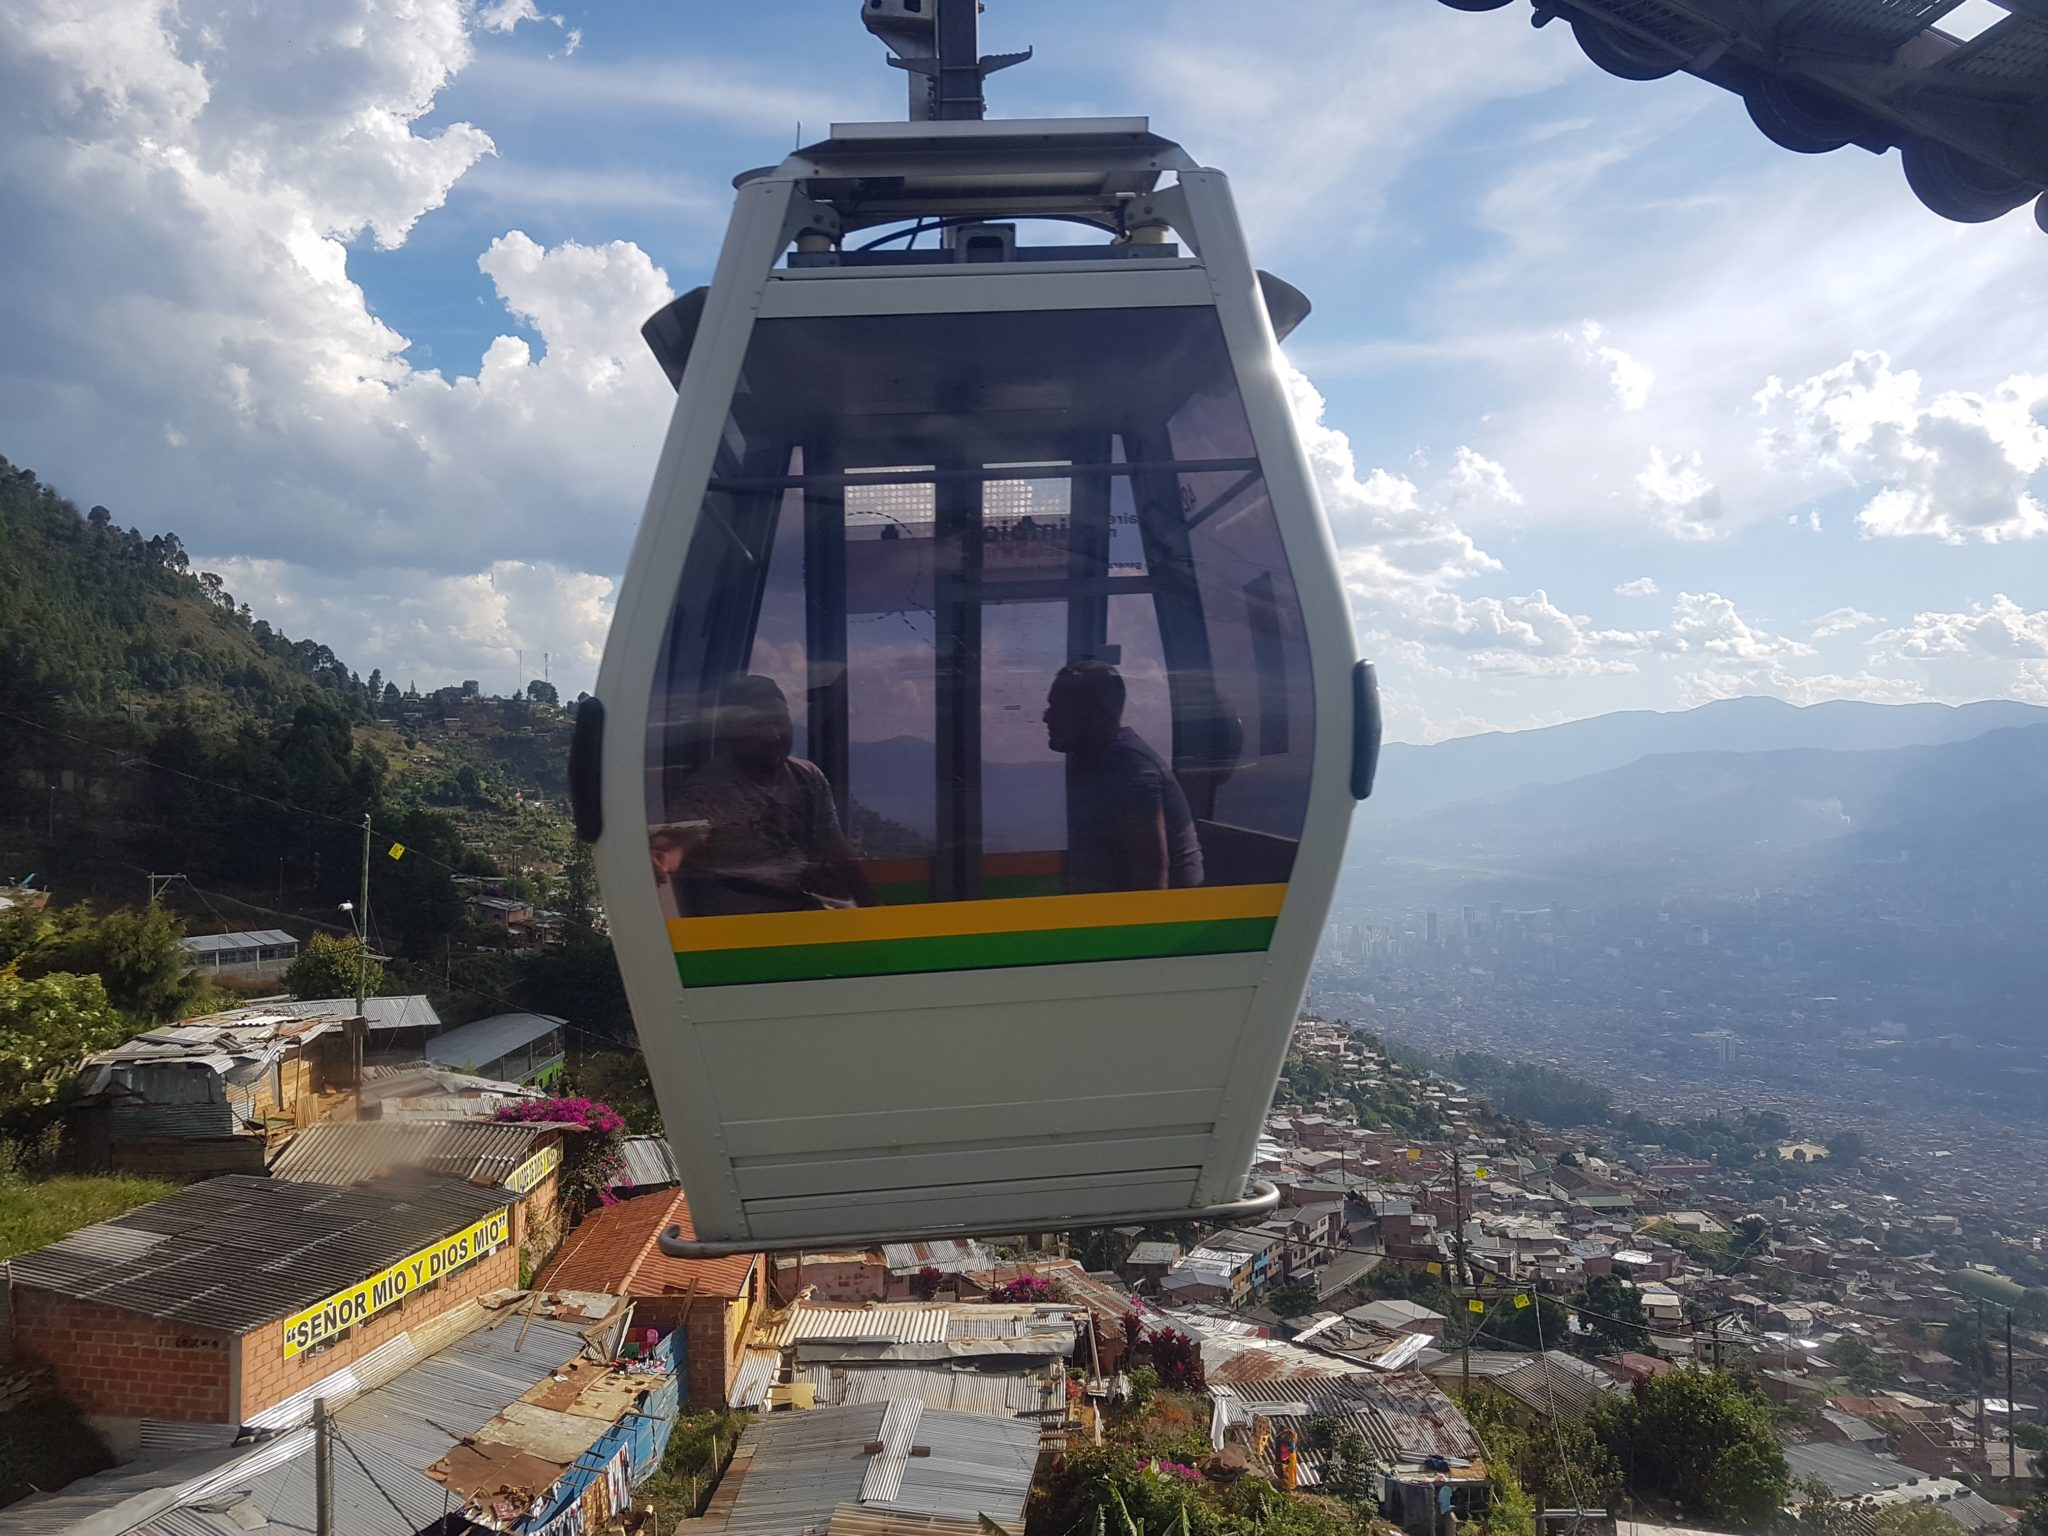 The Gondola Ride from Parque Arvi